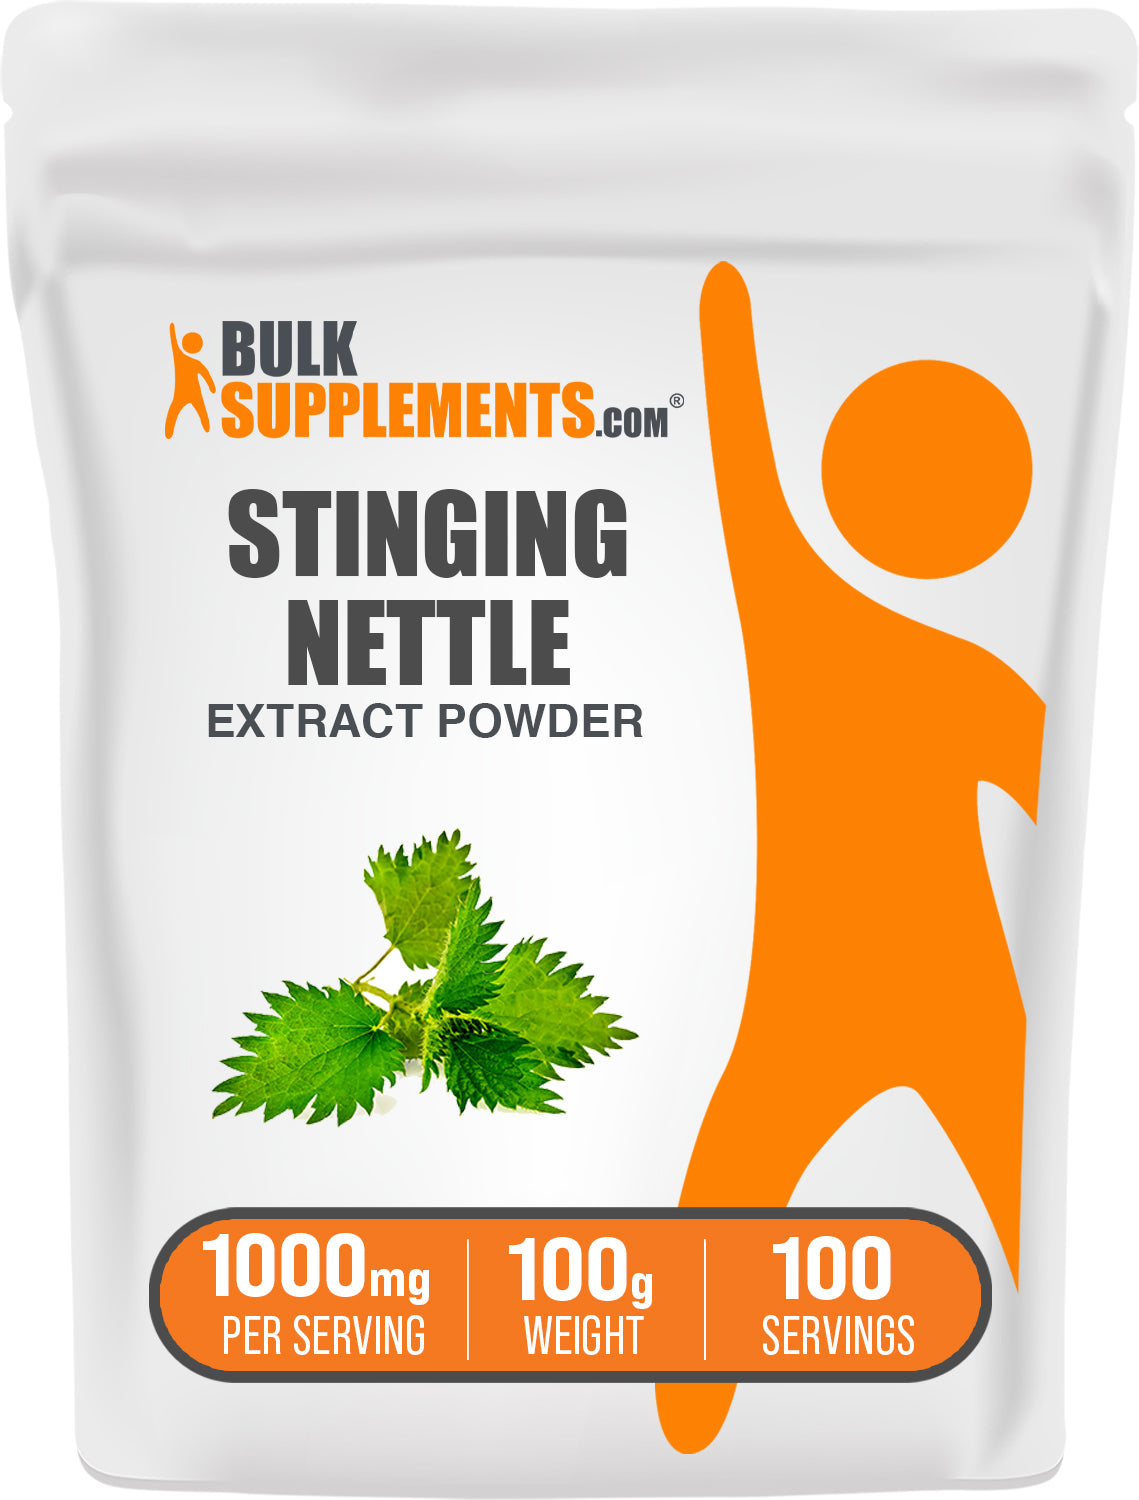 BulkSupplements.com Stinging Nettle Extract Powder 100g bag